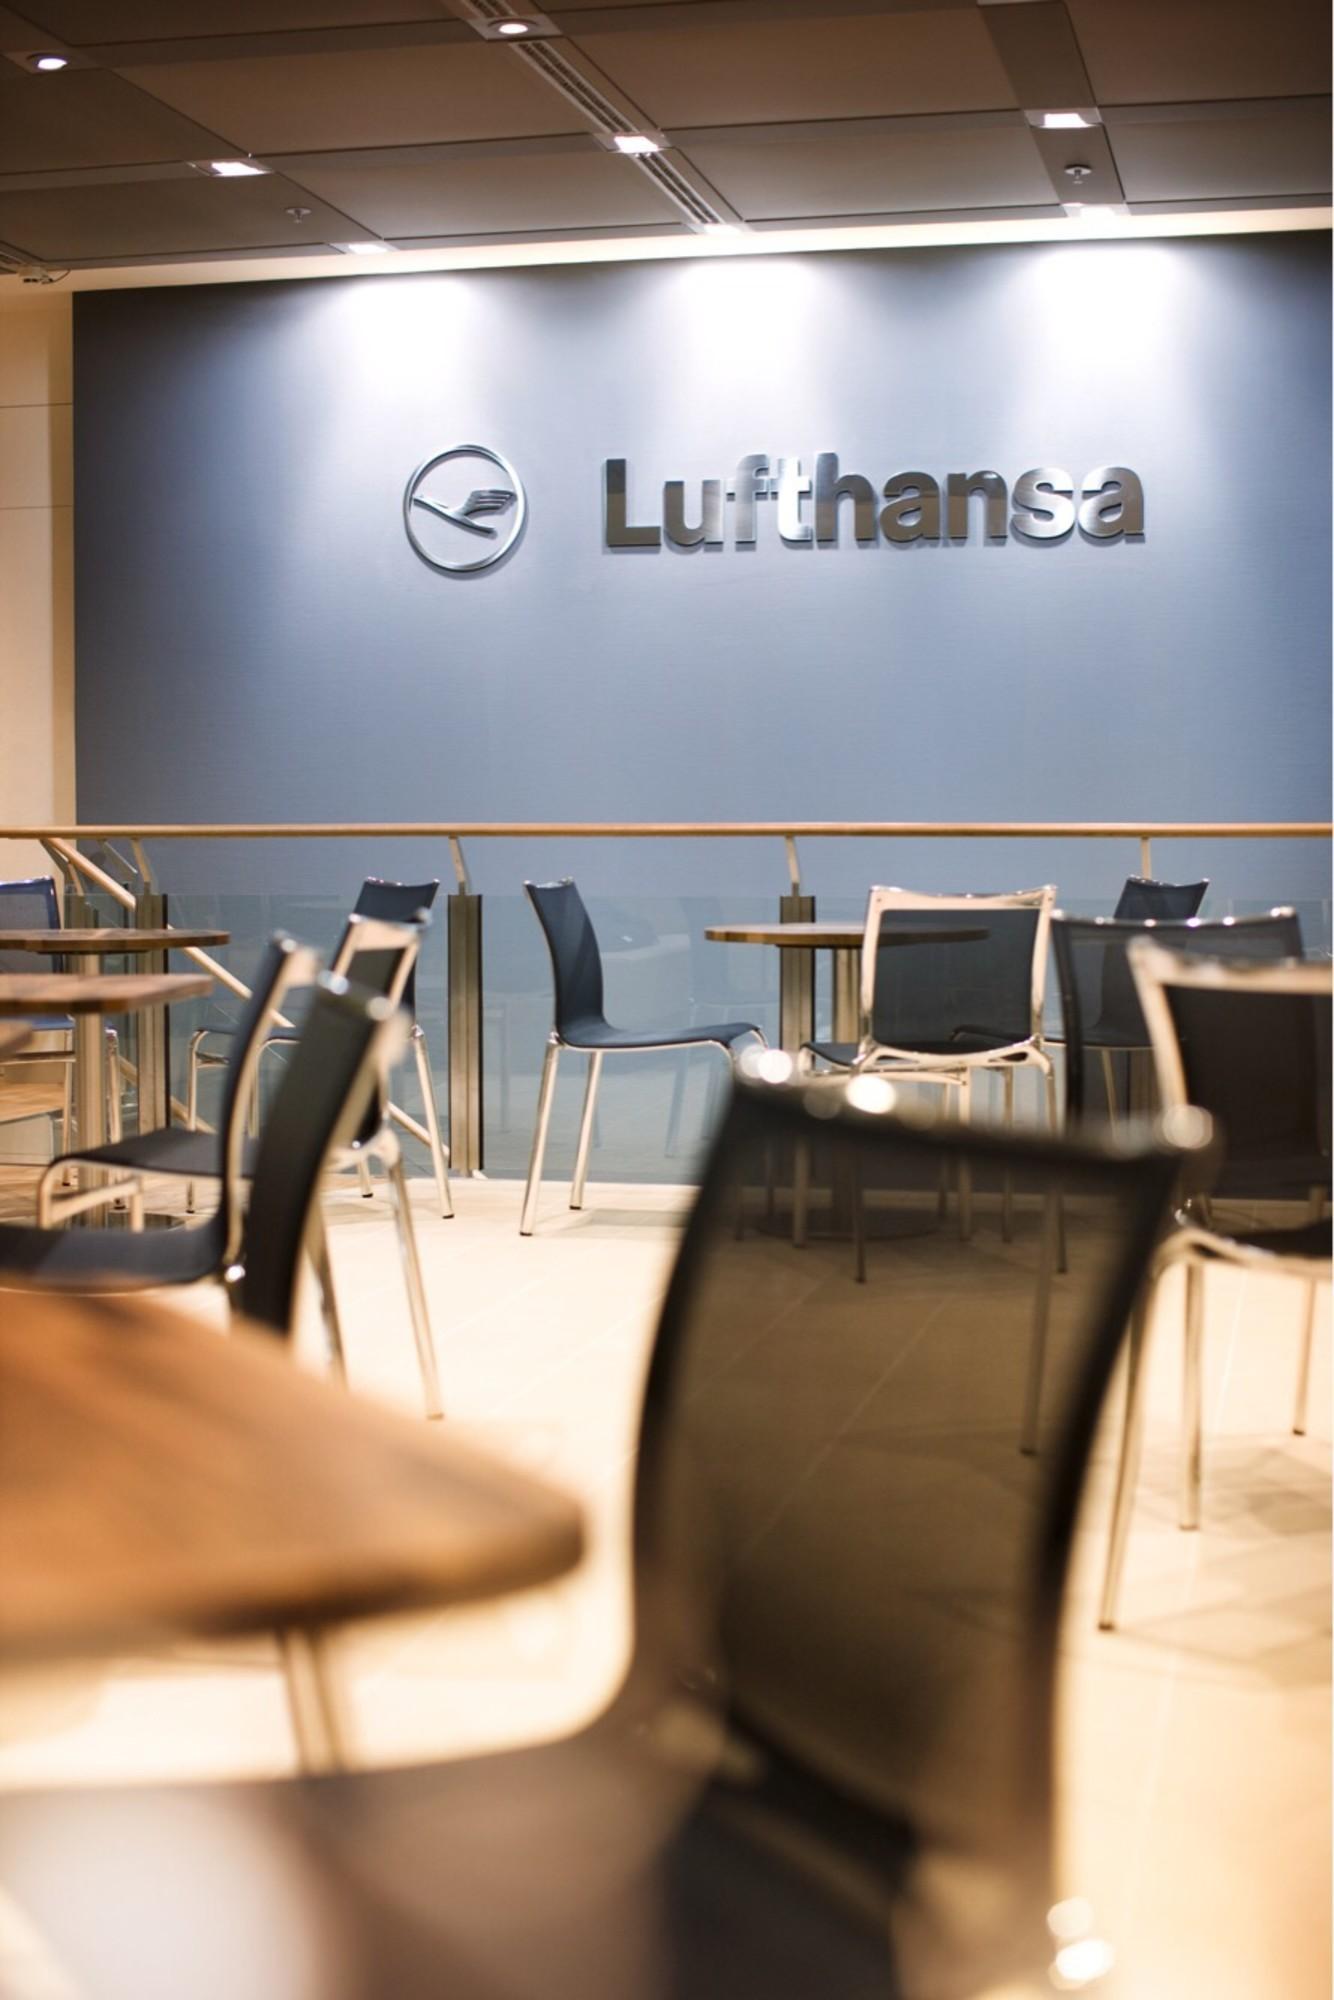 Lufthansa Welcome Lounge image 7 of 14